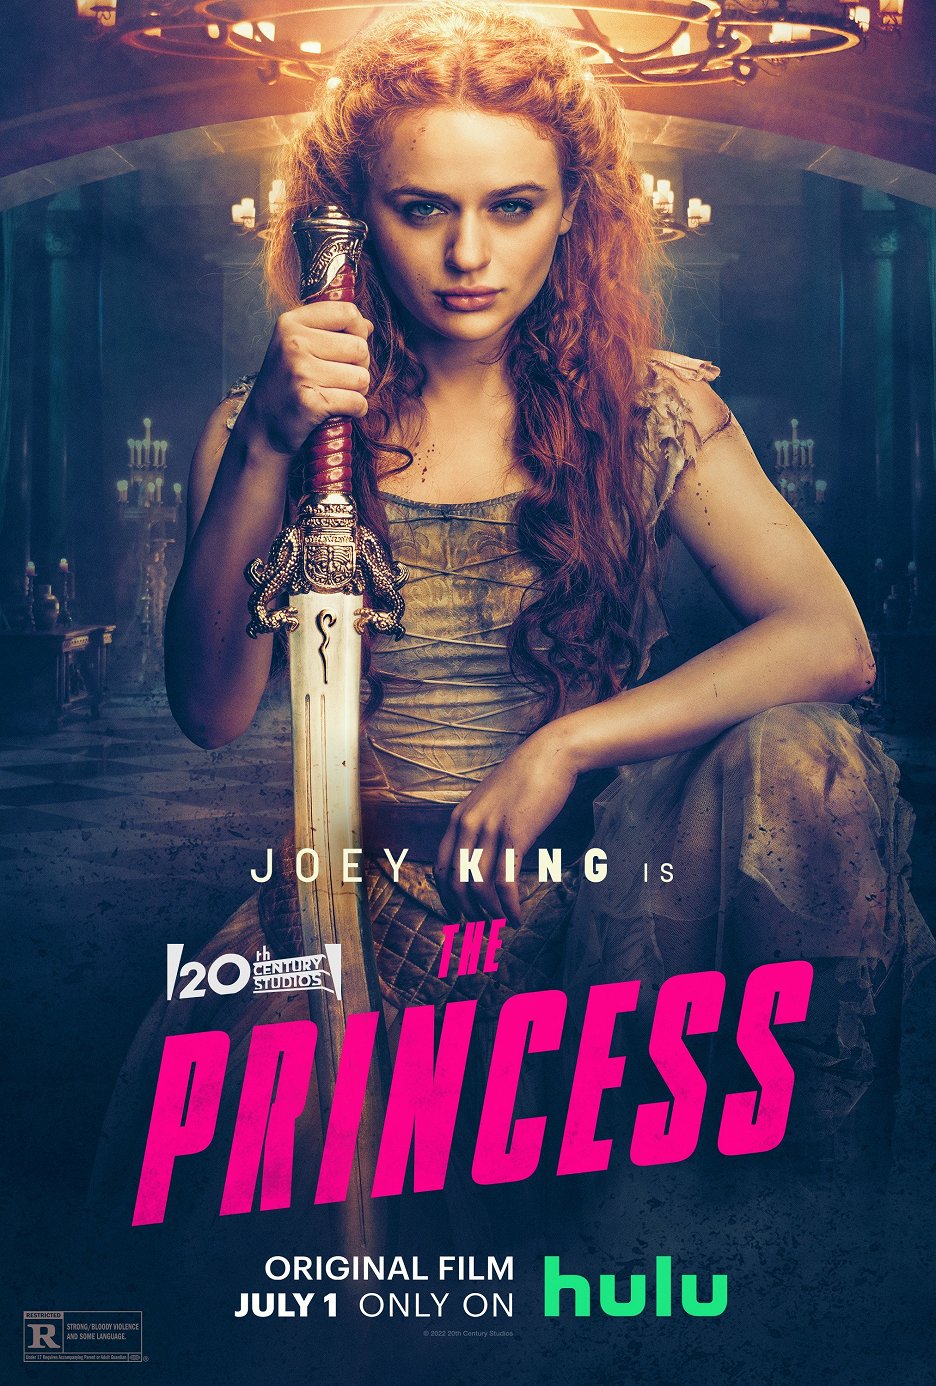 Stiahni si Filmy s titulkama Princezna / The Princess (2022)(1080p) = CSFD 50%